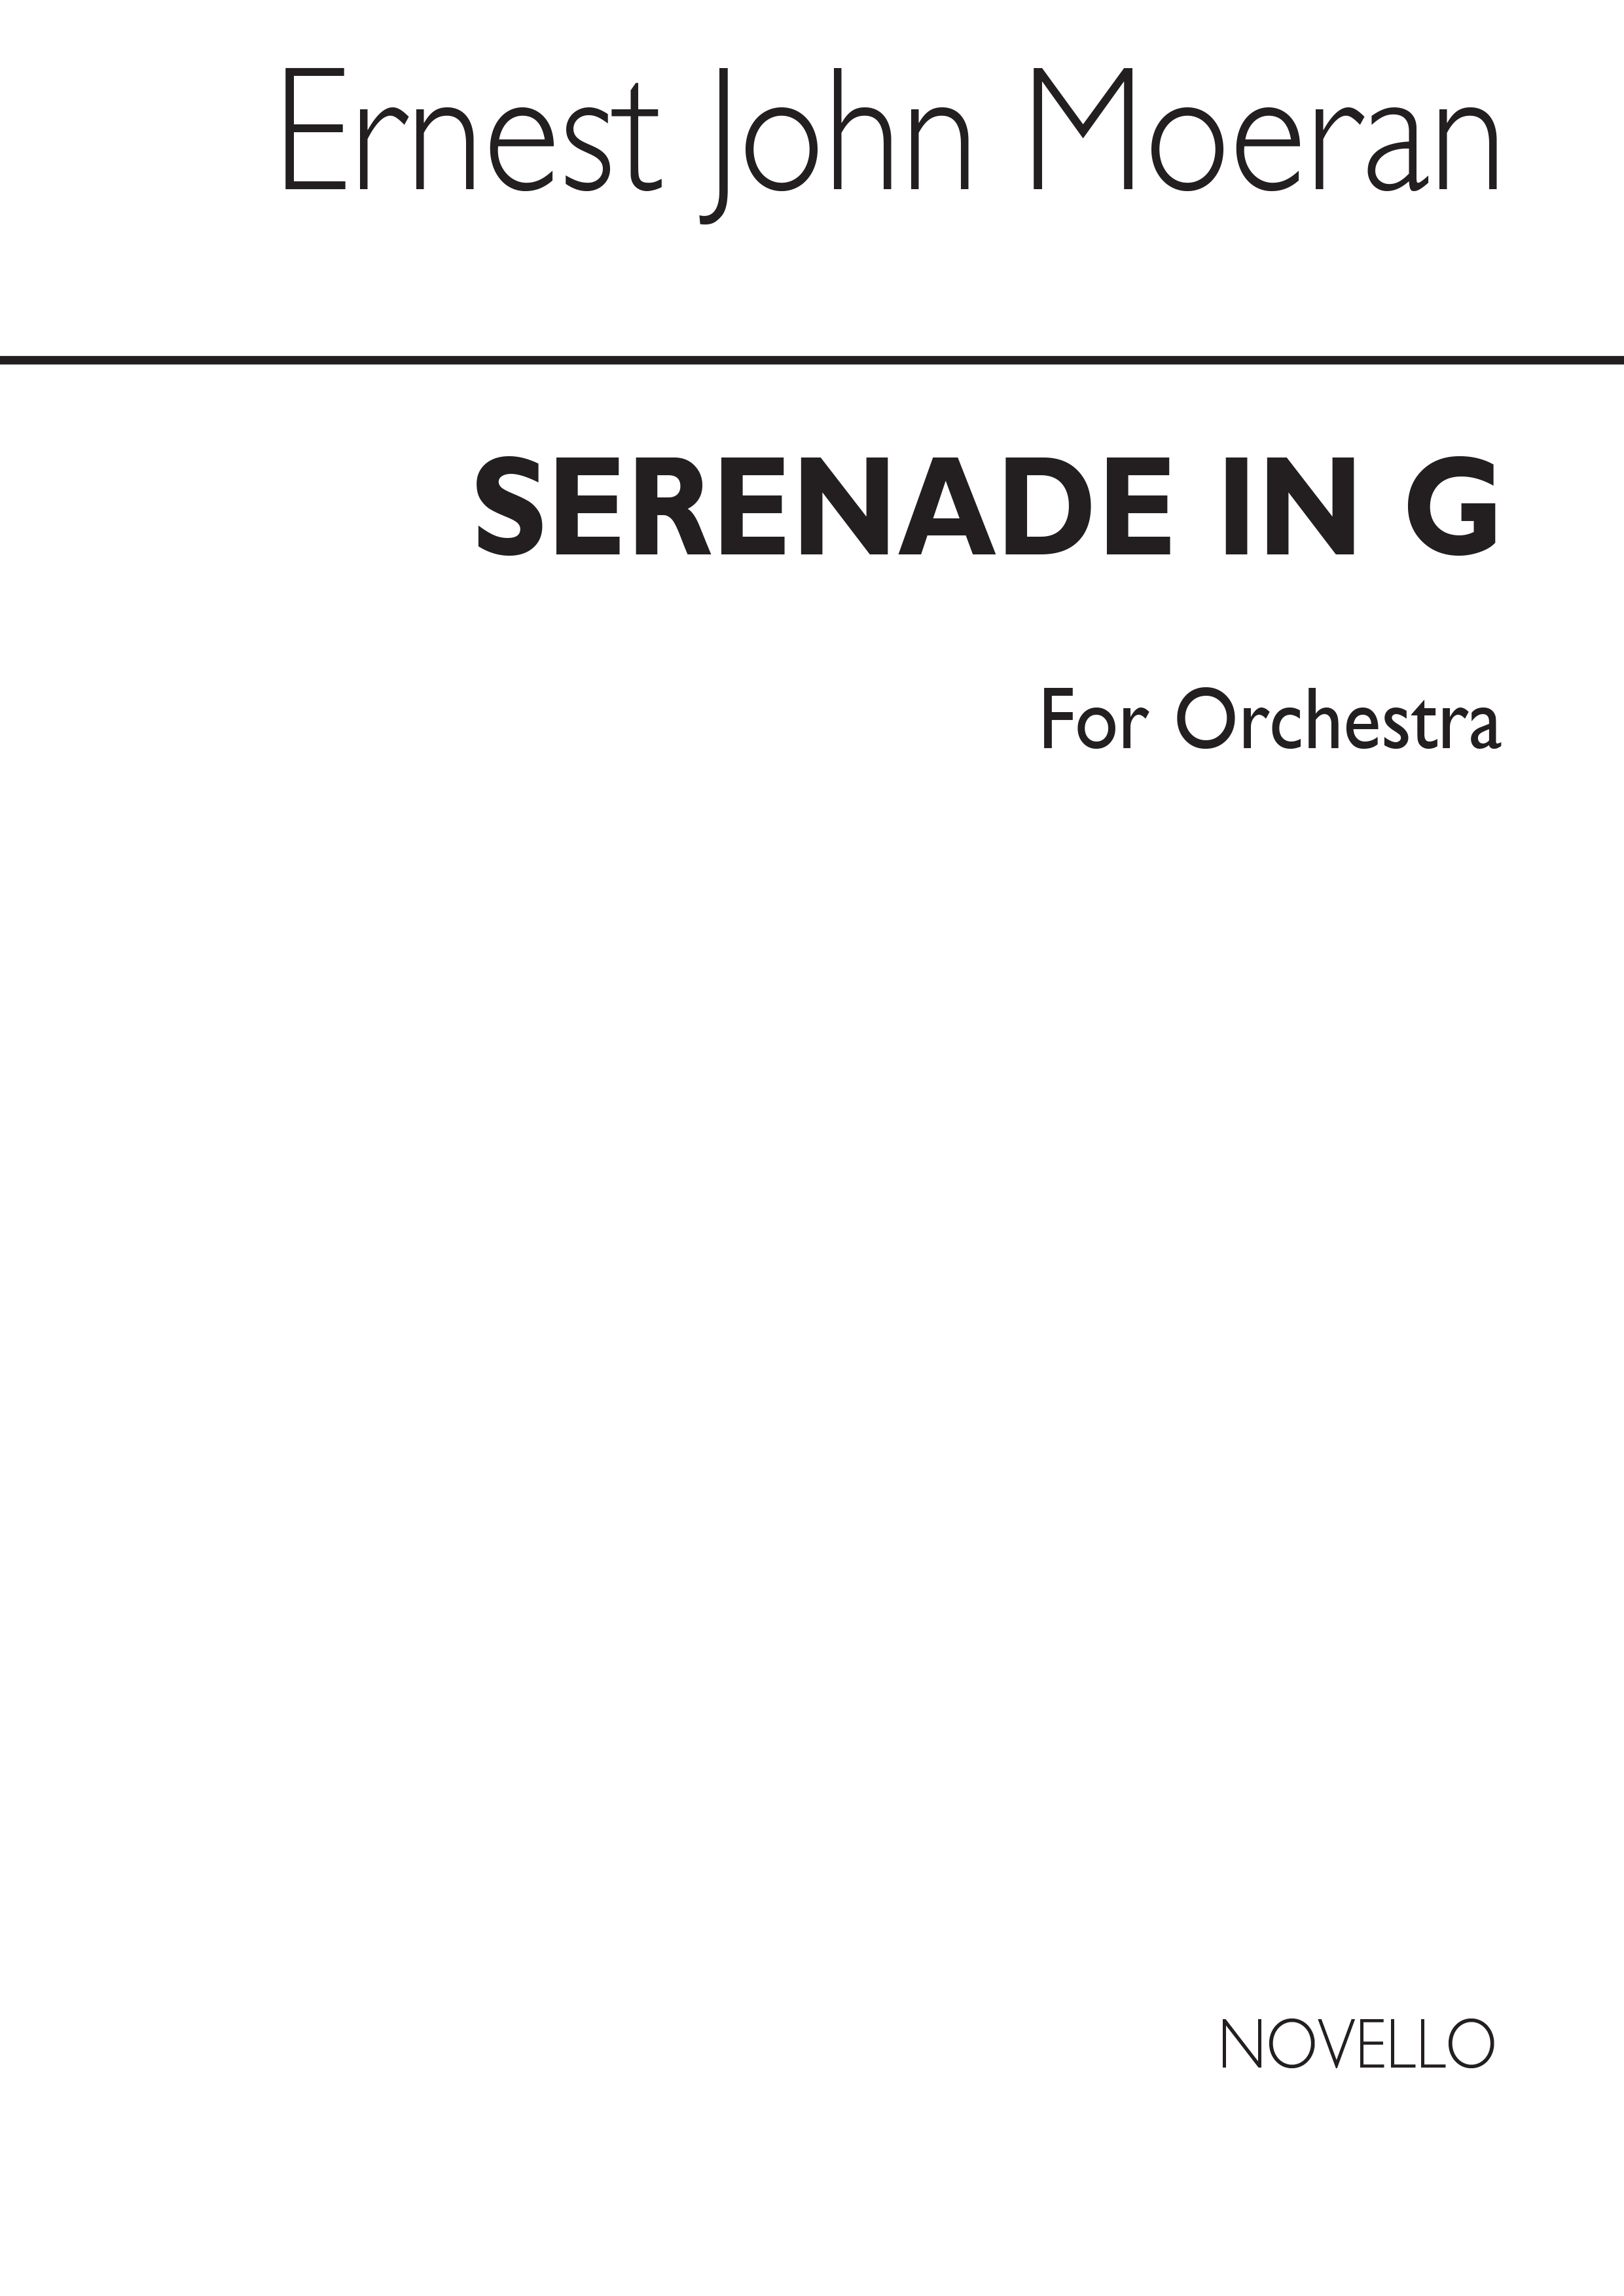 E.J. Moeran: Moeran Serenade In G For Orchestra: Orchestra: Score